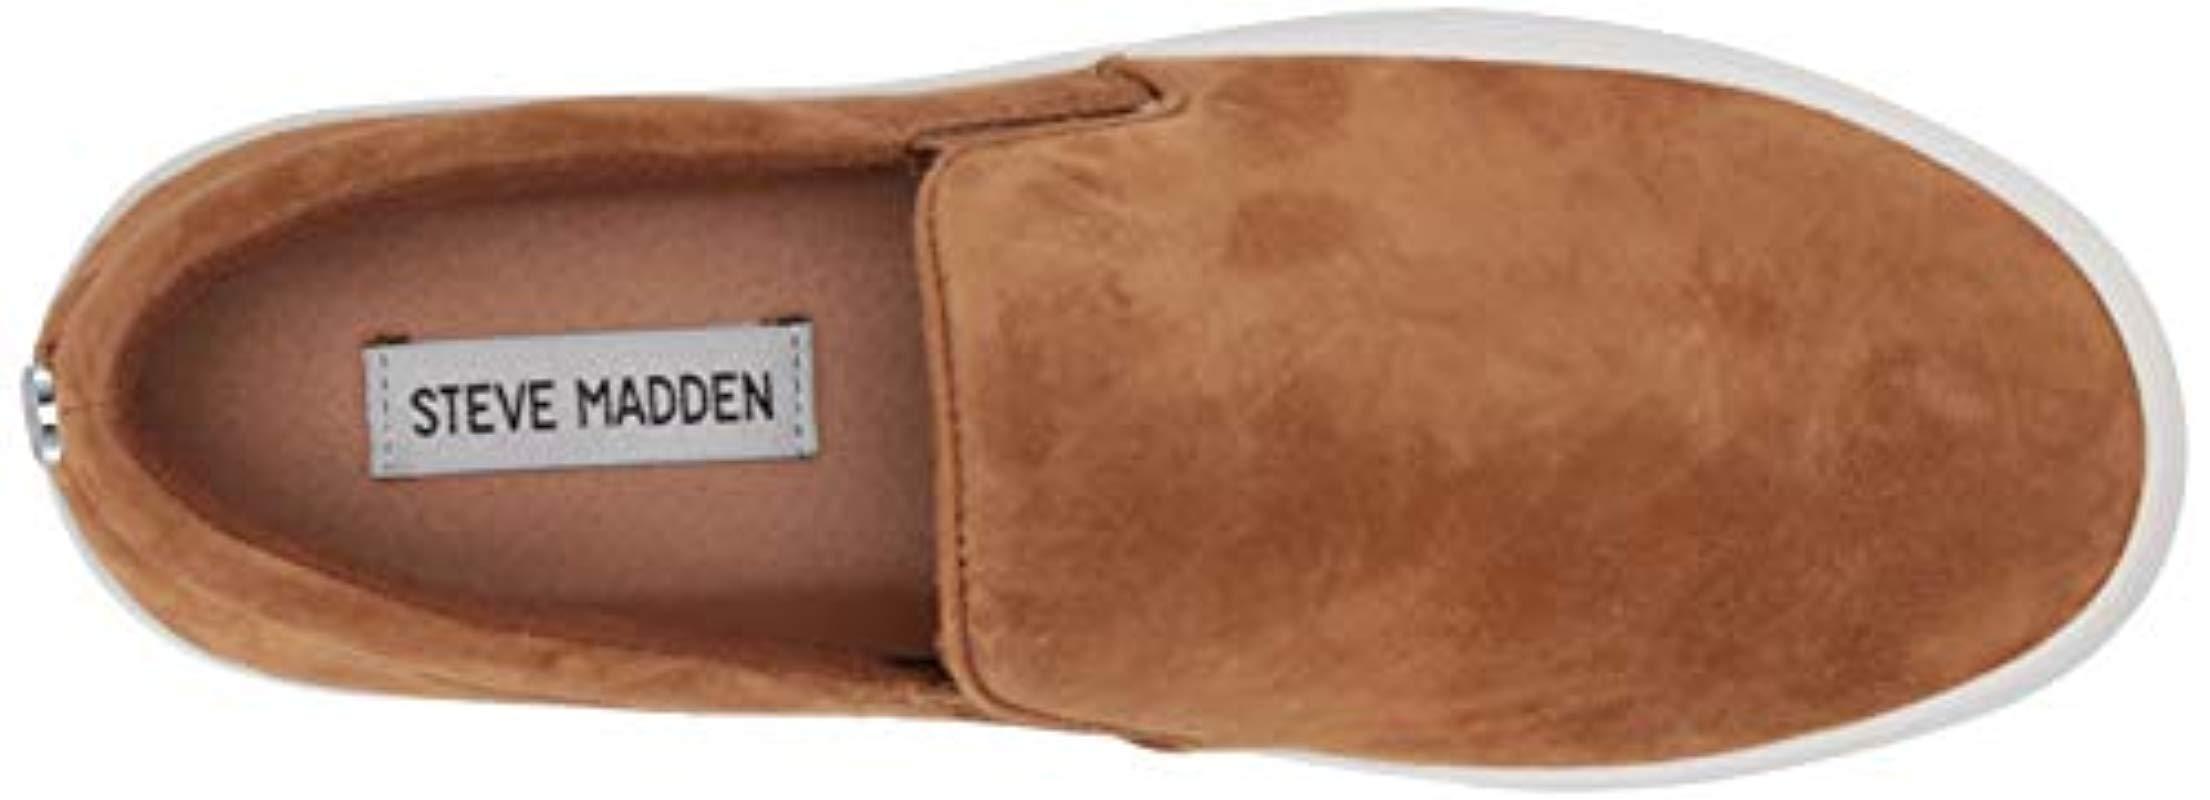 Steve Madden Gills Sneaker in Chestnut Suede (Brown) - Lyst